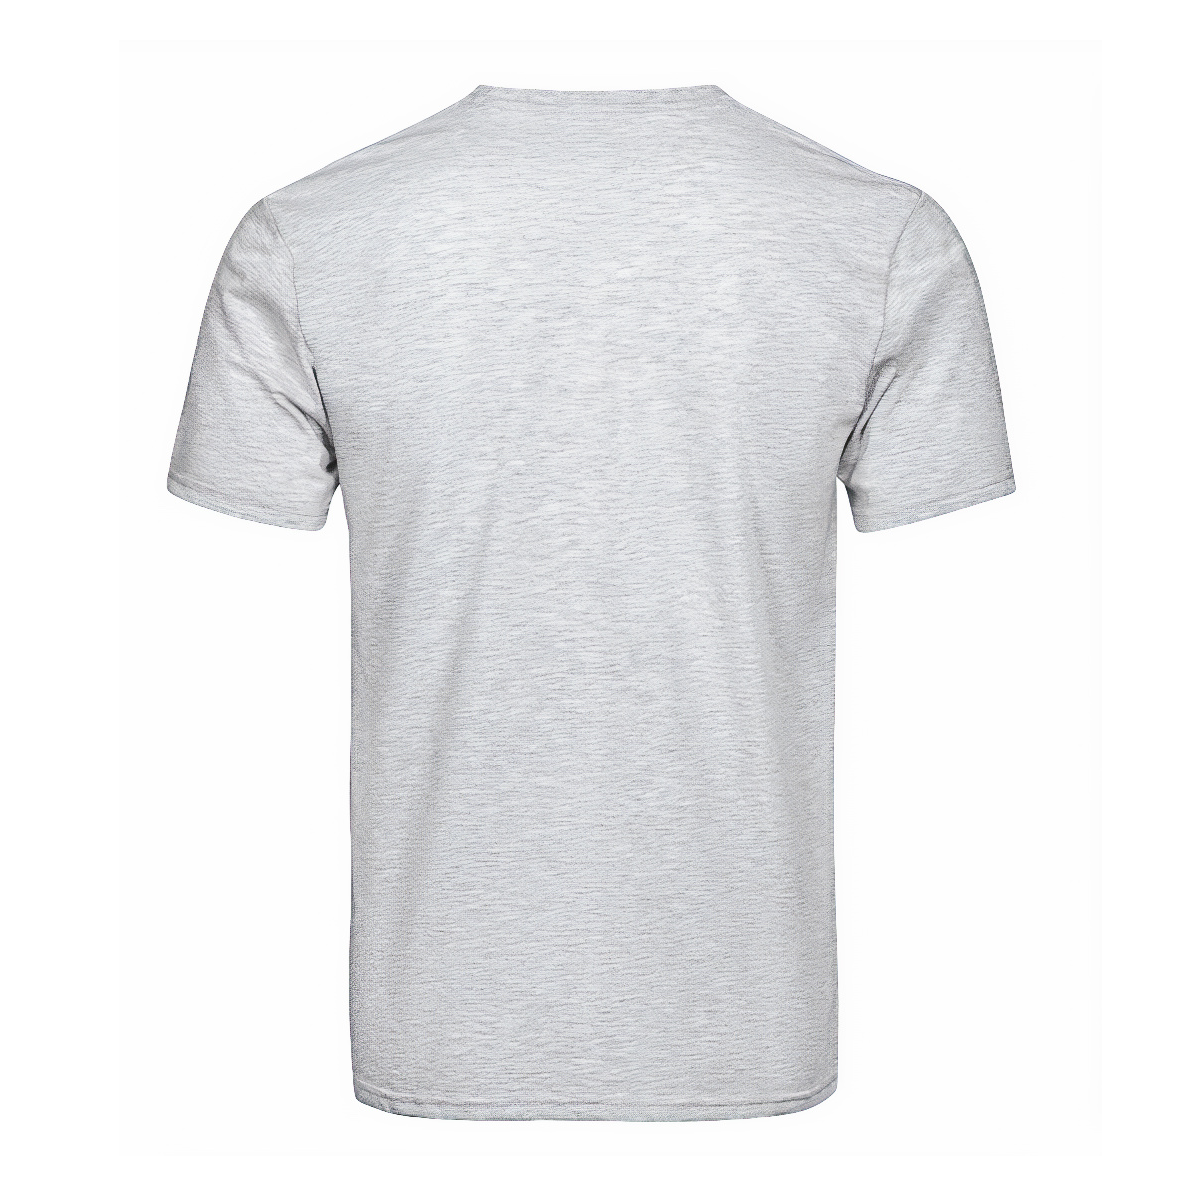 Morrison Tartan Crest T-shirt - I'm not yelling style